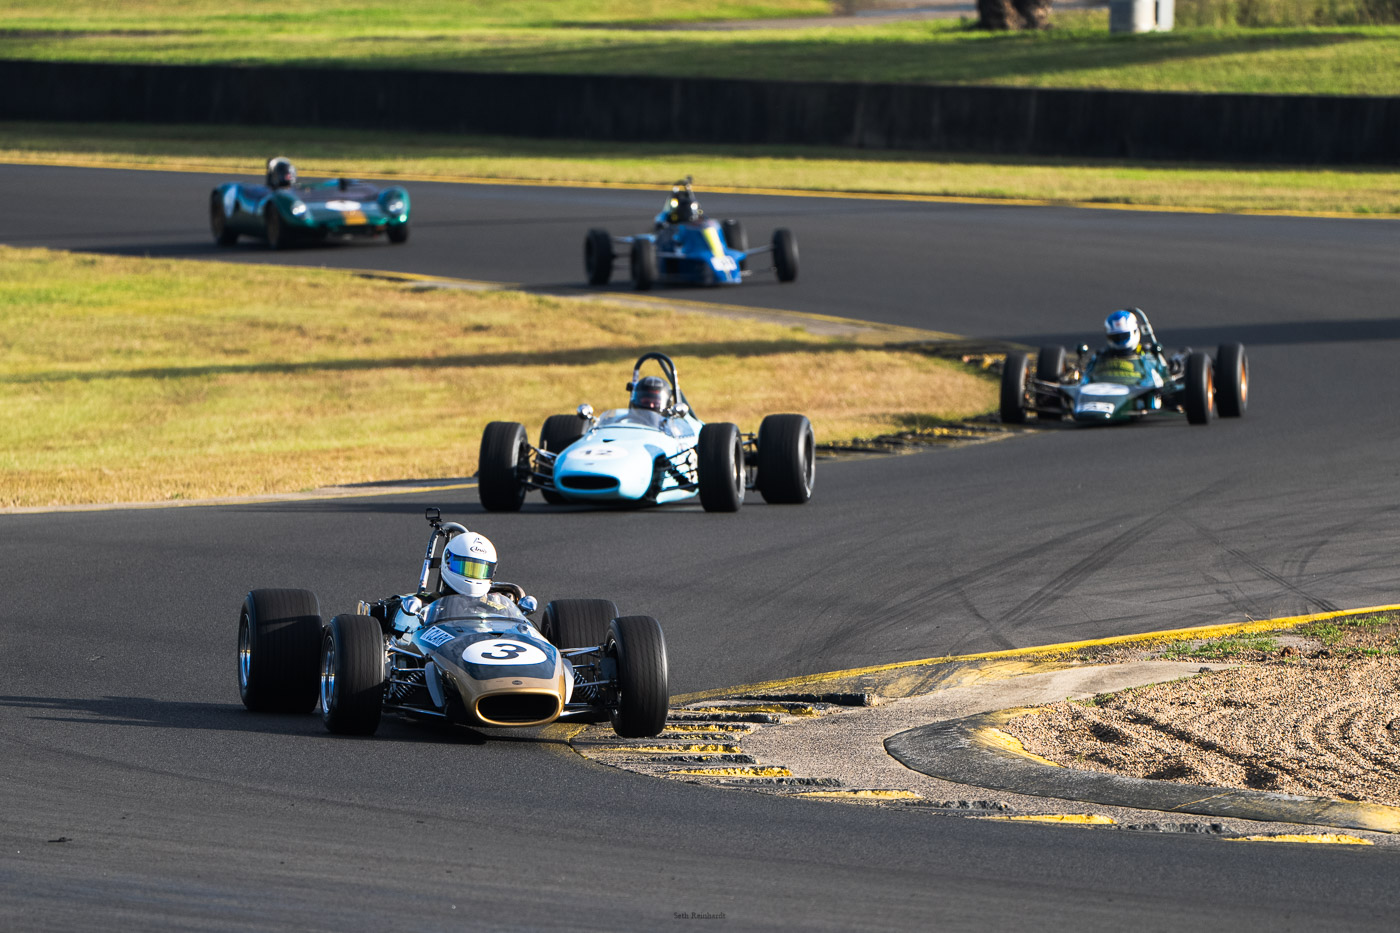 Travis Clark leading L, M, O and Formula Ford